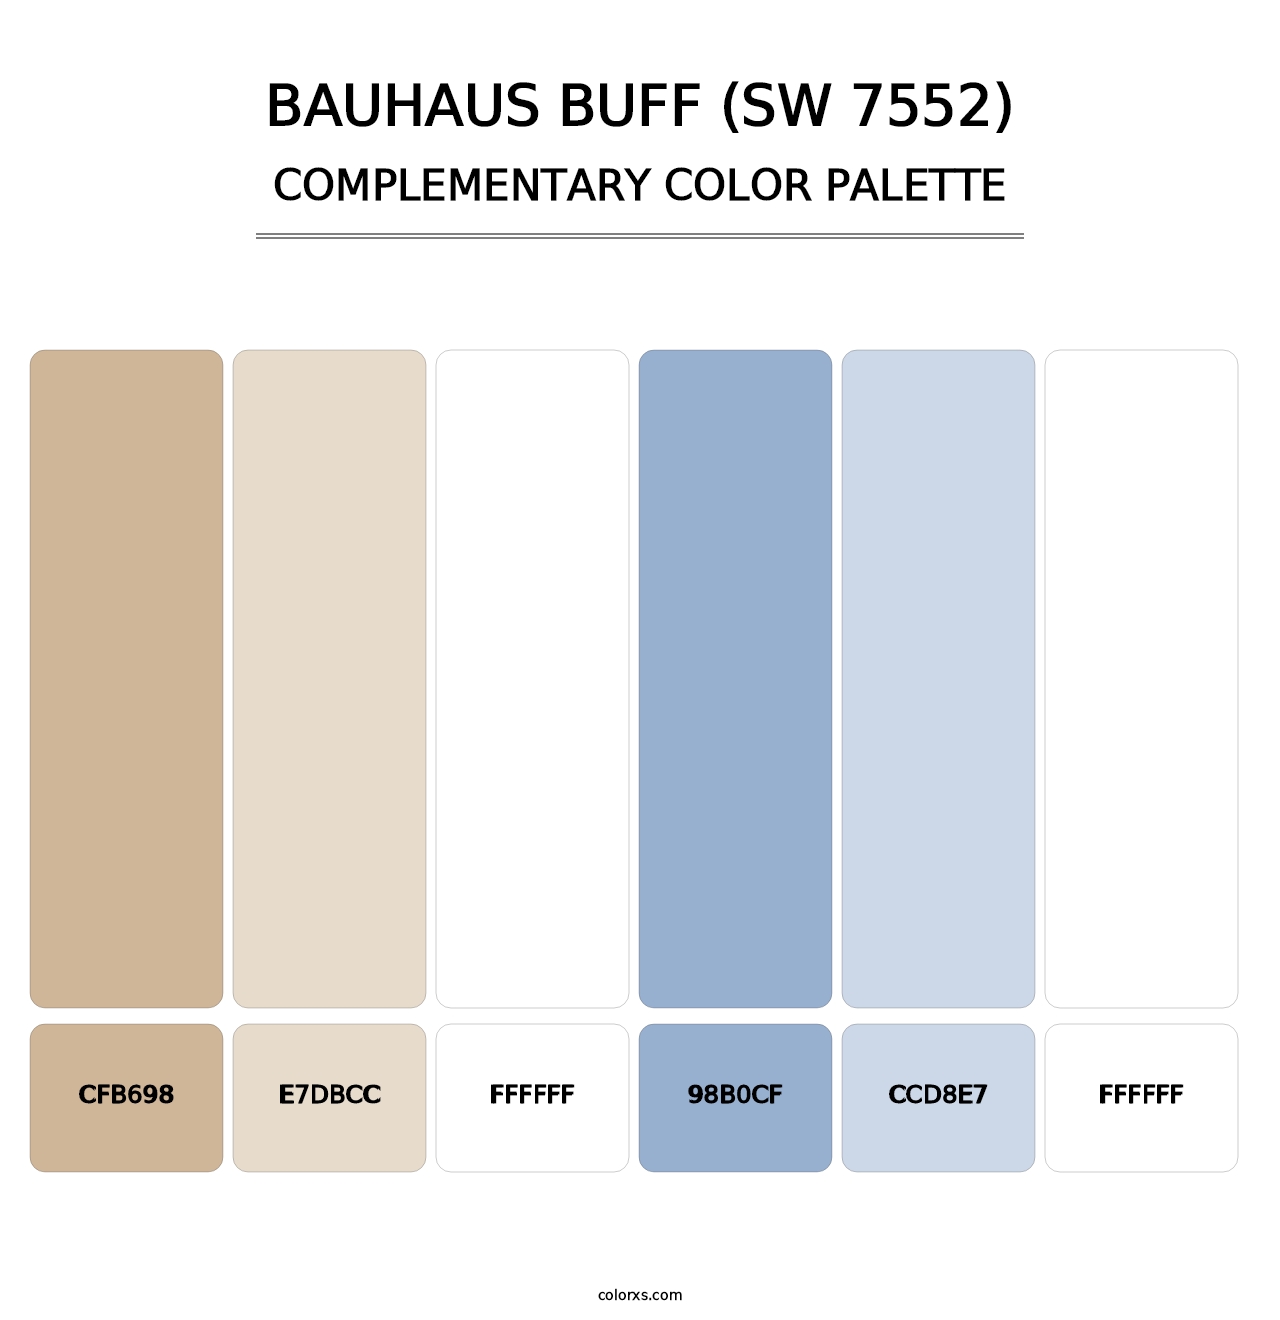 Bauhaus Buff (SW 7552) - Complementary Color Palette